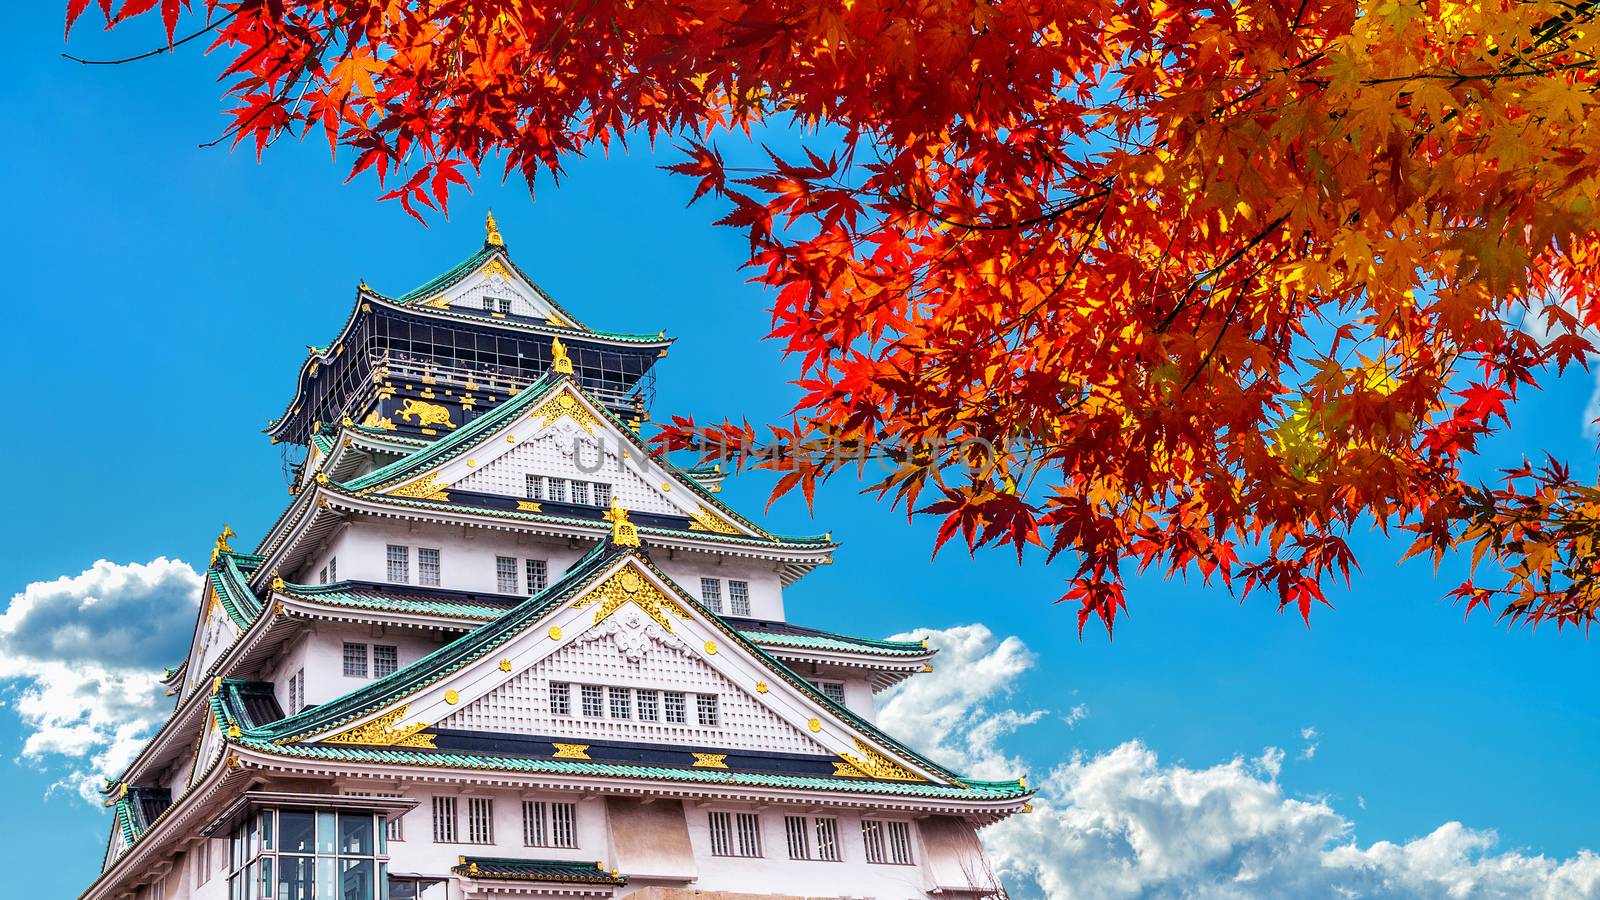 Autumn Season and Osaka castle in Japan. by gutarphotoghaphy